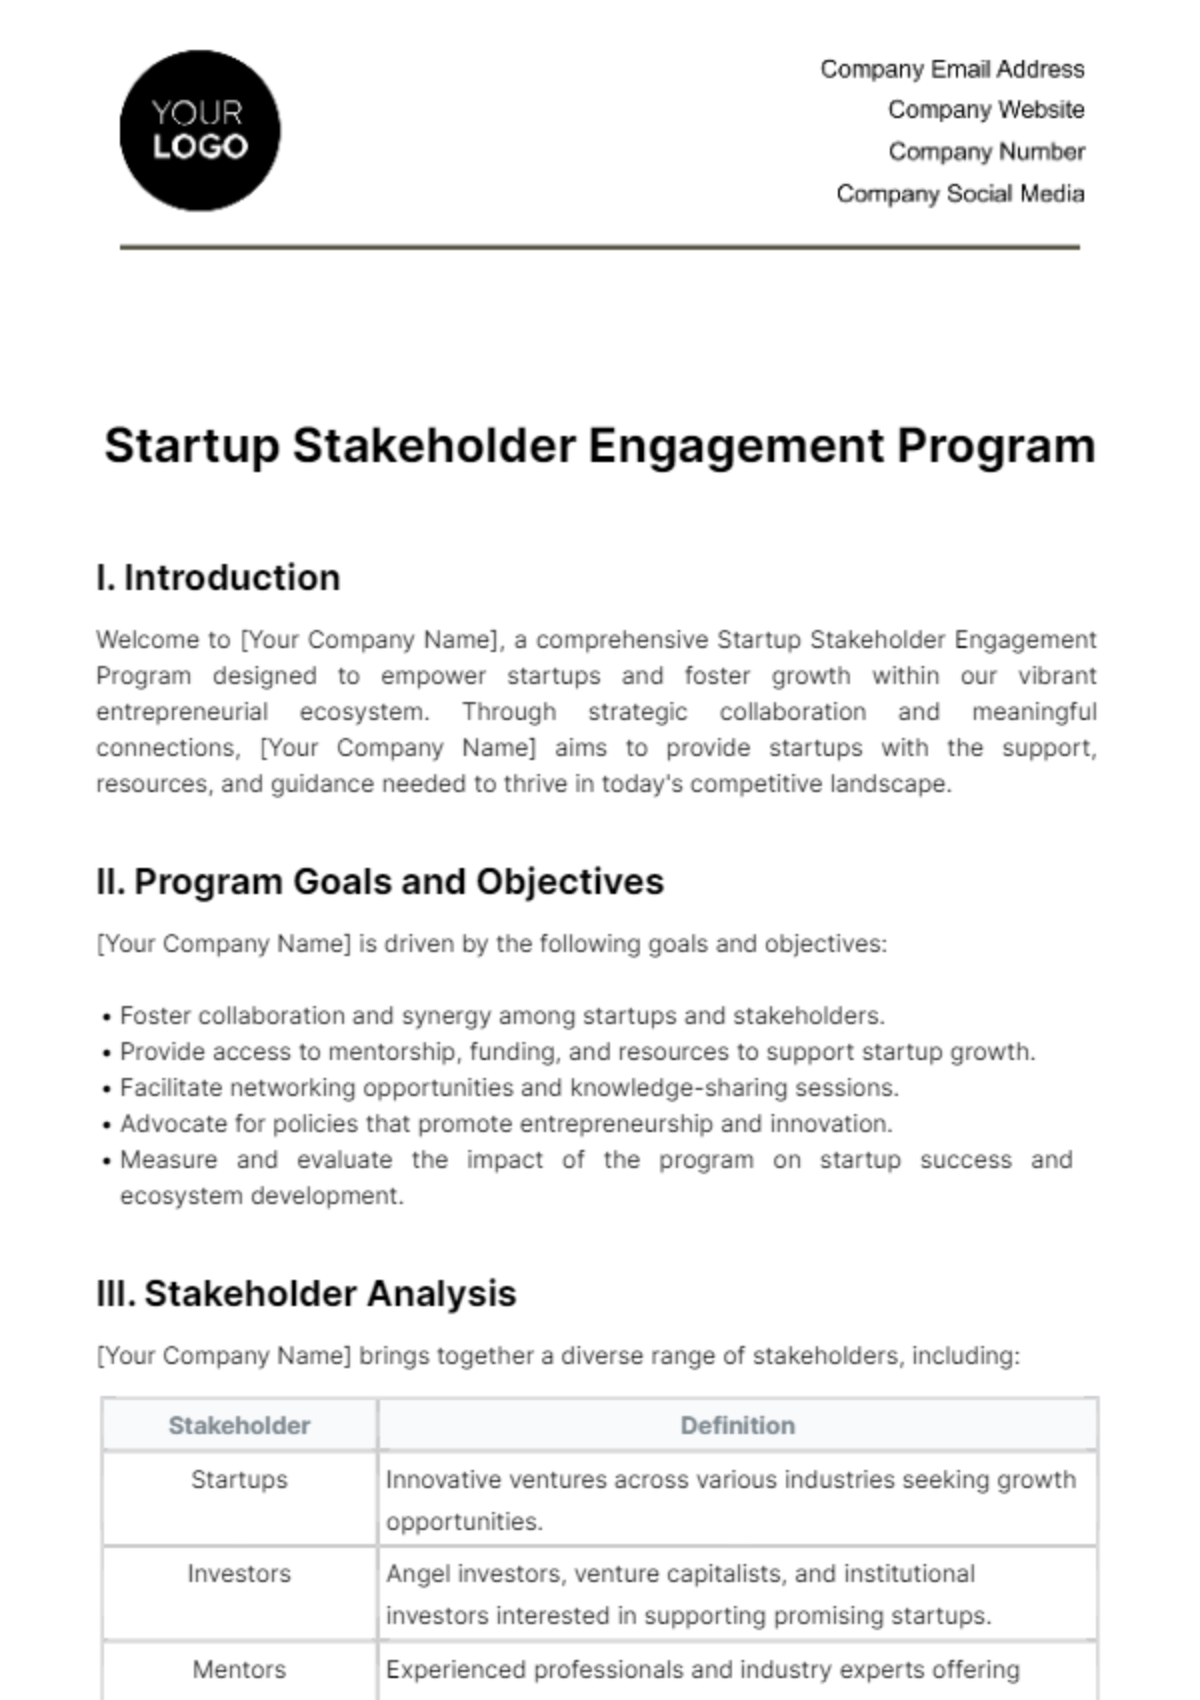 Free Startup Stakeholder Engagement Program Template